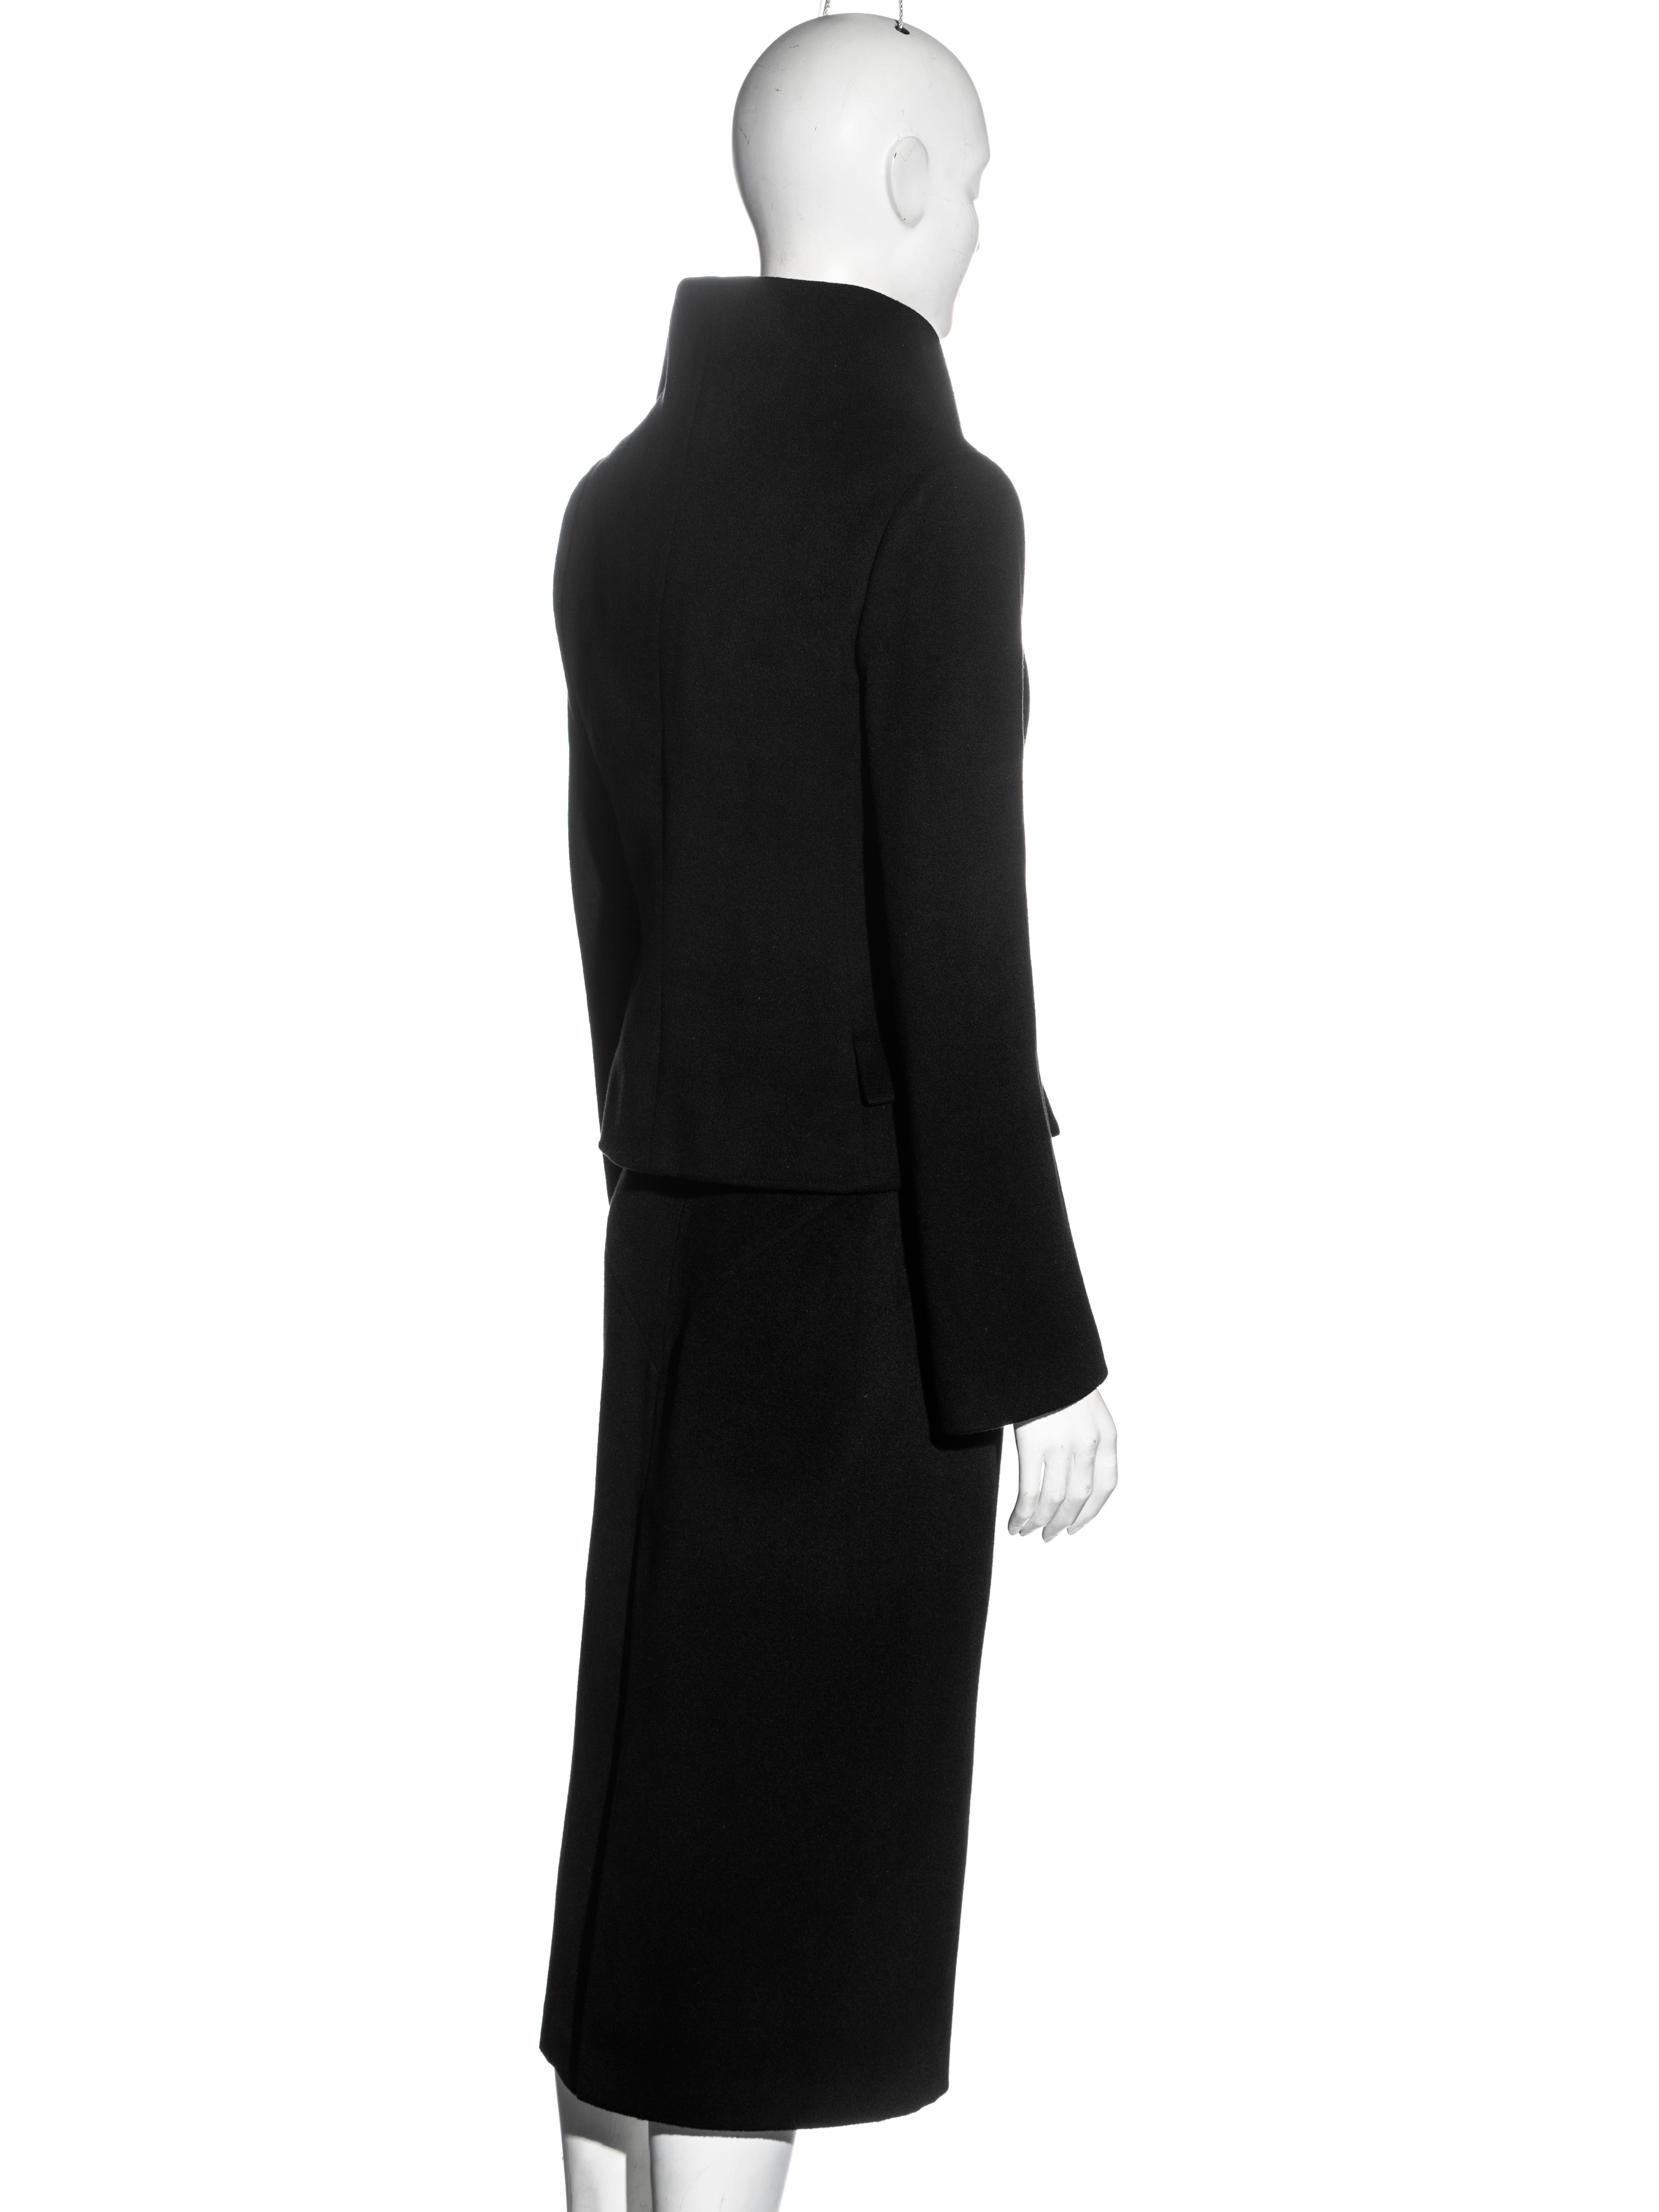 Alexander McQueen black cashmere 'Joan' jacket and skirt suit, fw 1998 8